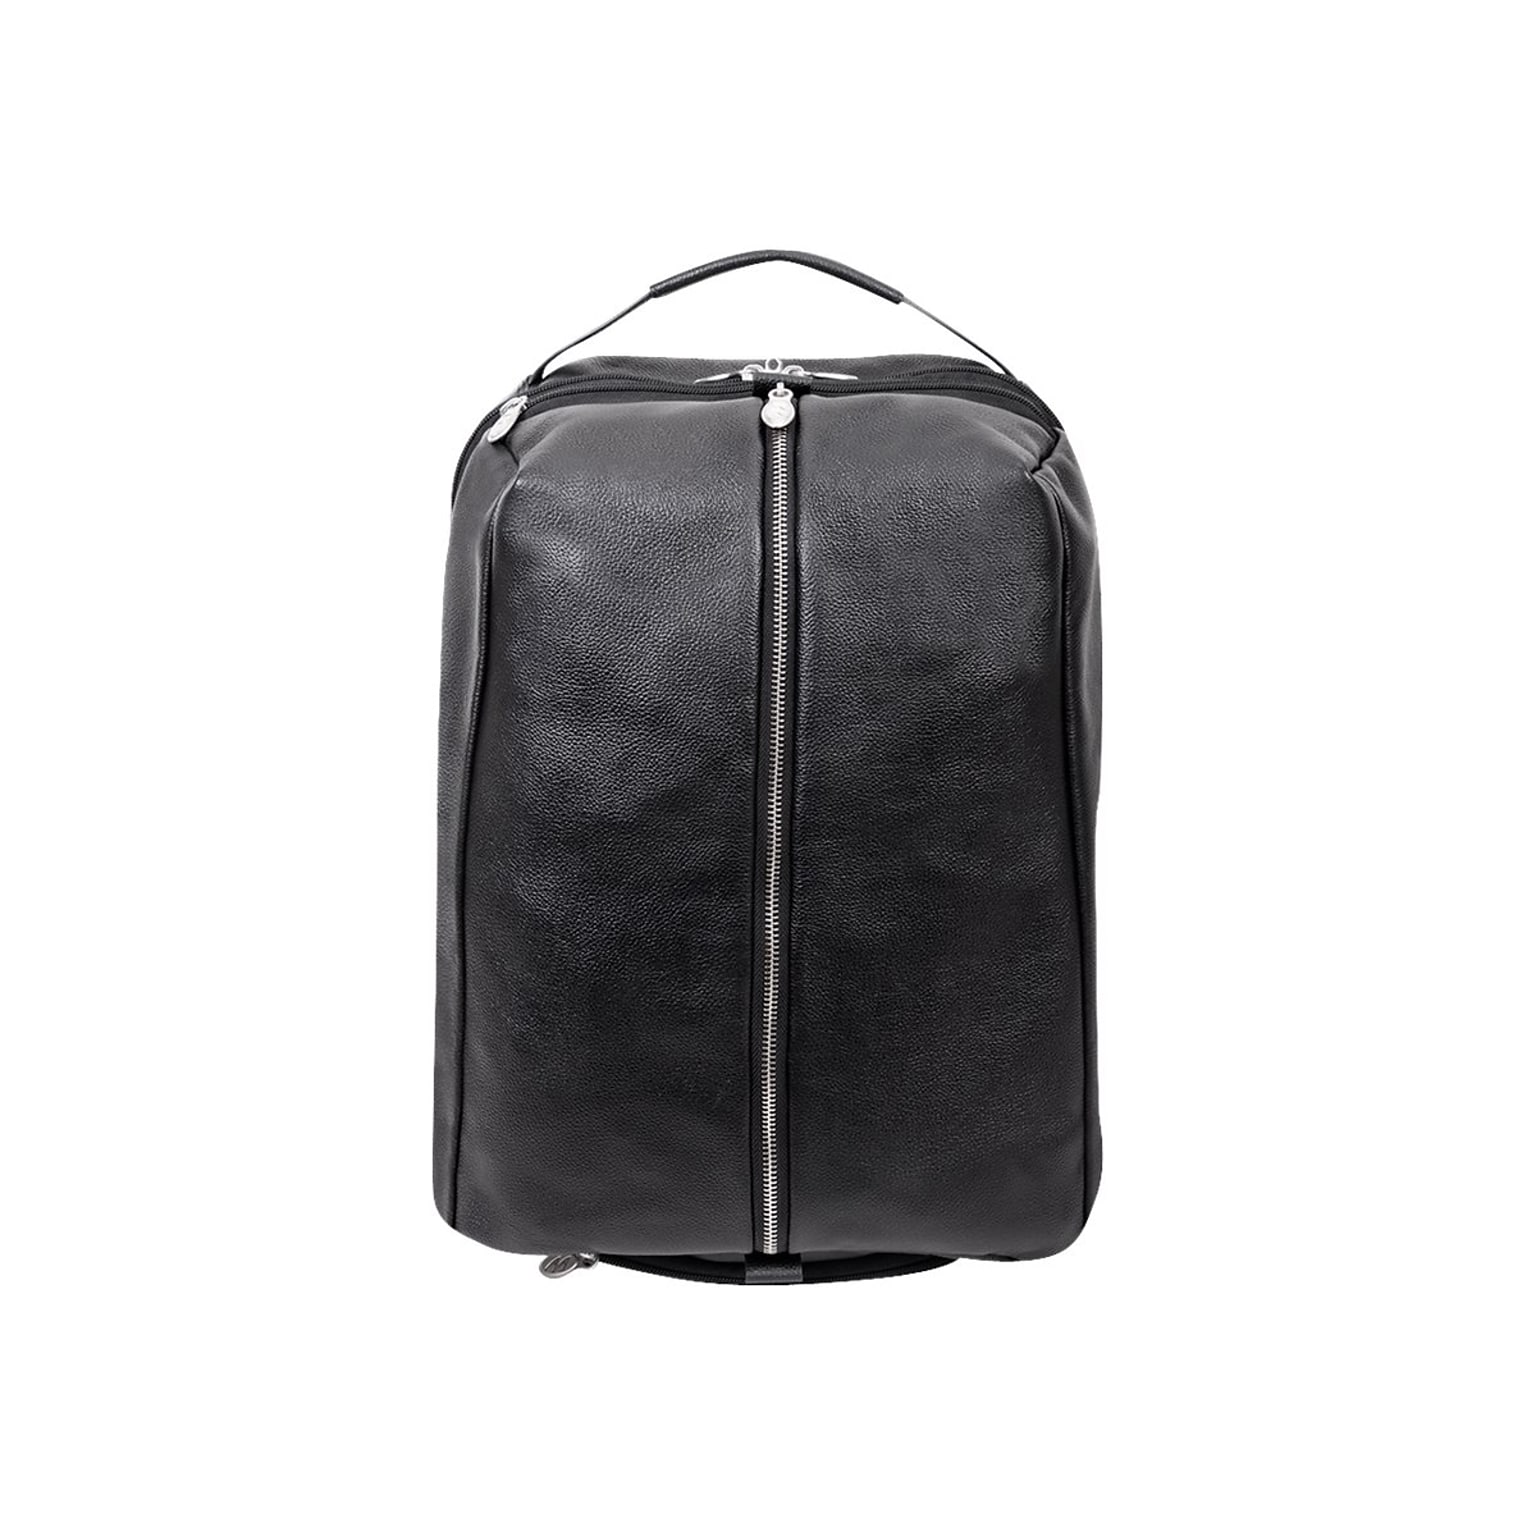 McKlein U Series South Shore Laptop Backpack, Black Leather (18885)